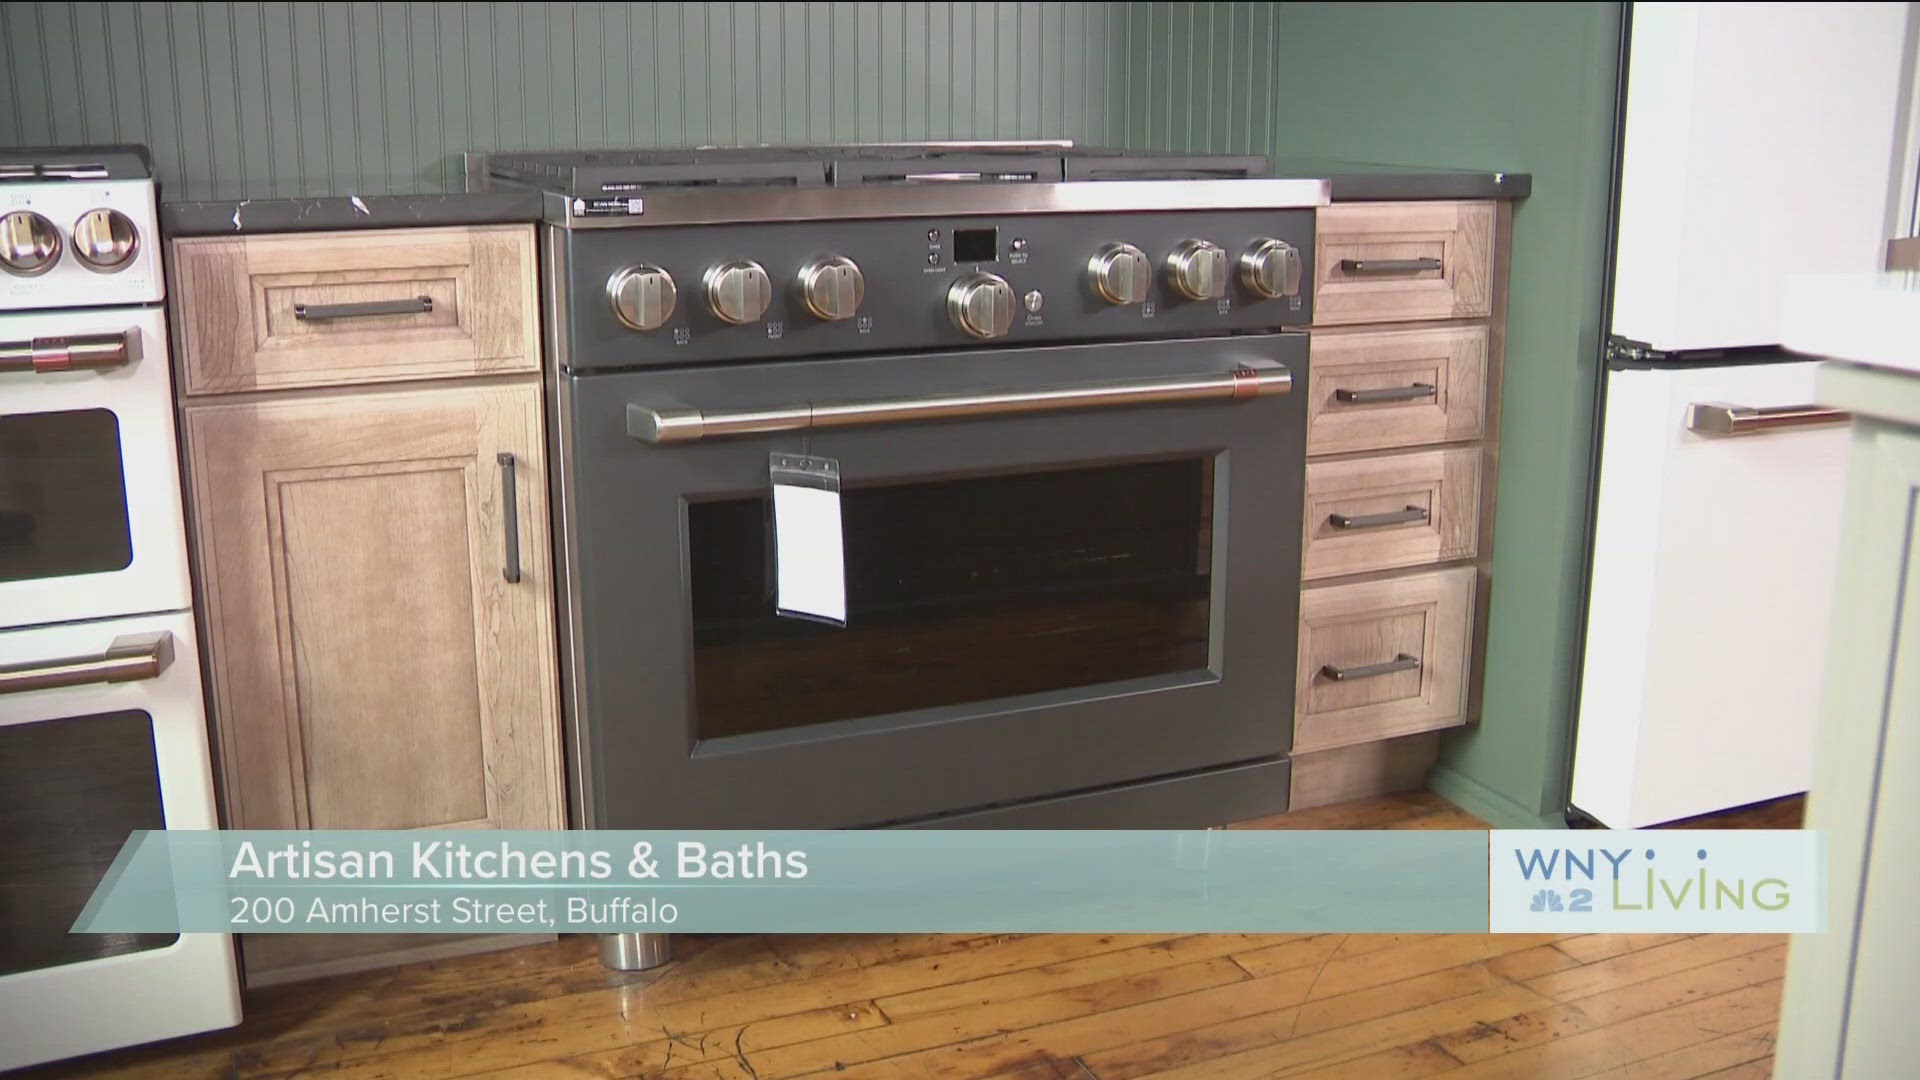 Sat 4/20 Artisan Kitchens & Baths (THIS VIDEO IS SPONSORED BY ARTISAN KITCHENS & BATHS)